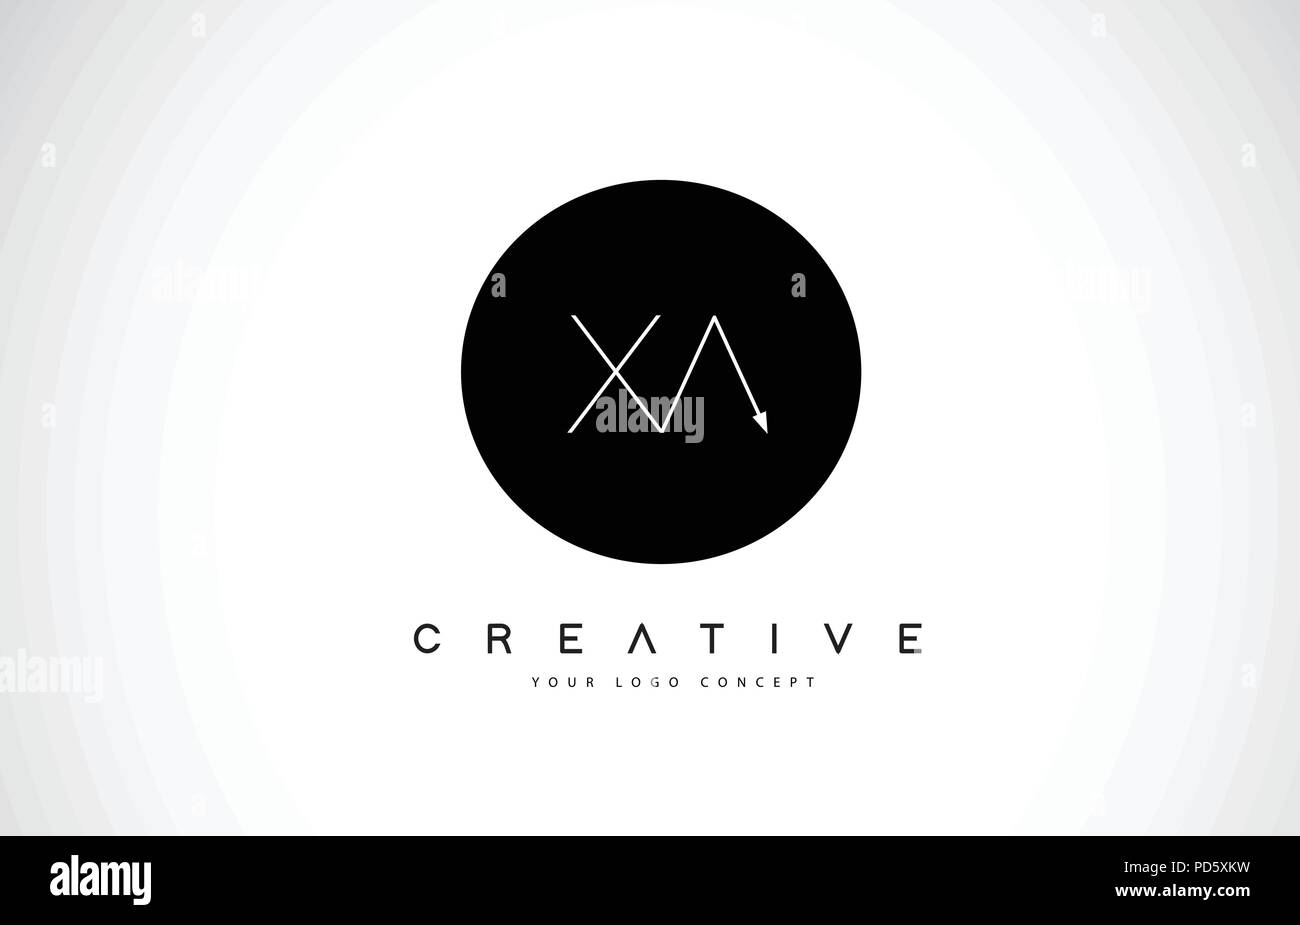 XA X A Logo Design with Black and White Creative Icon Text Letter Vector. Stock Vector